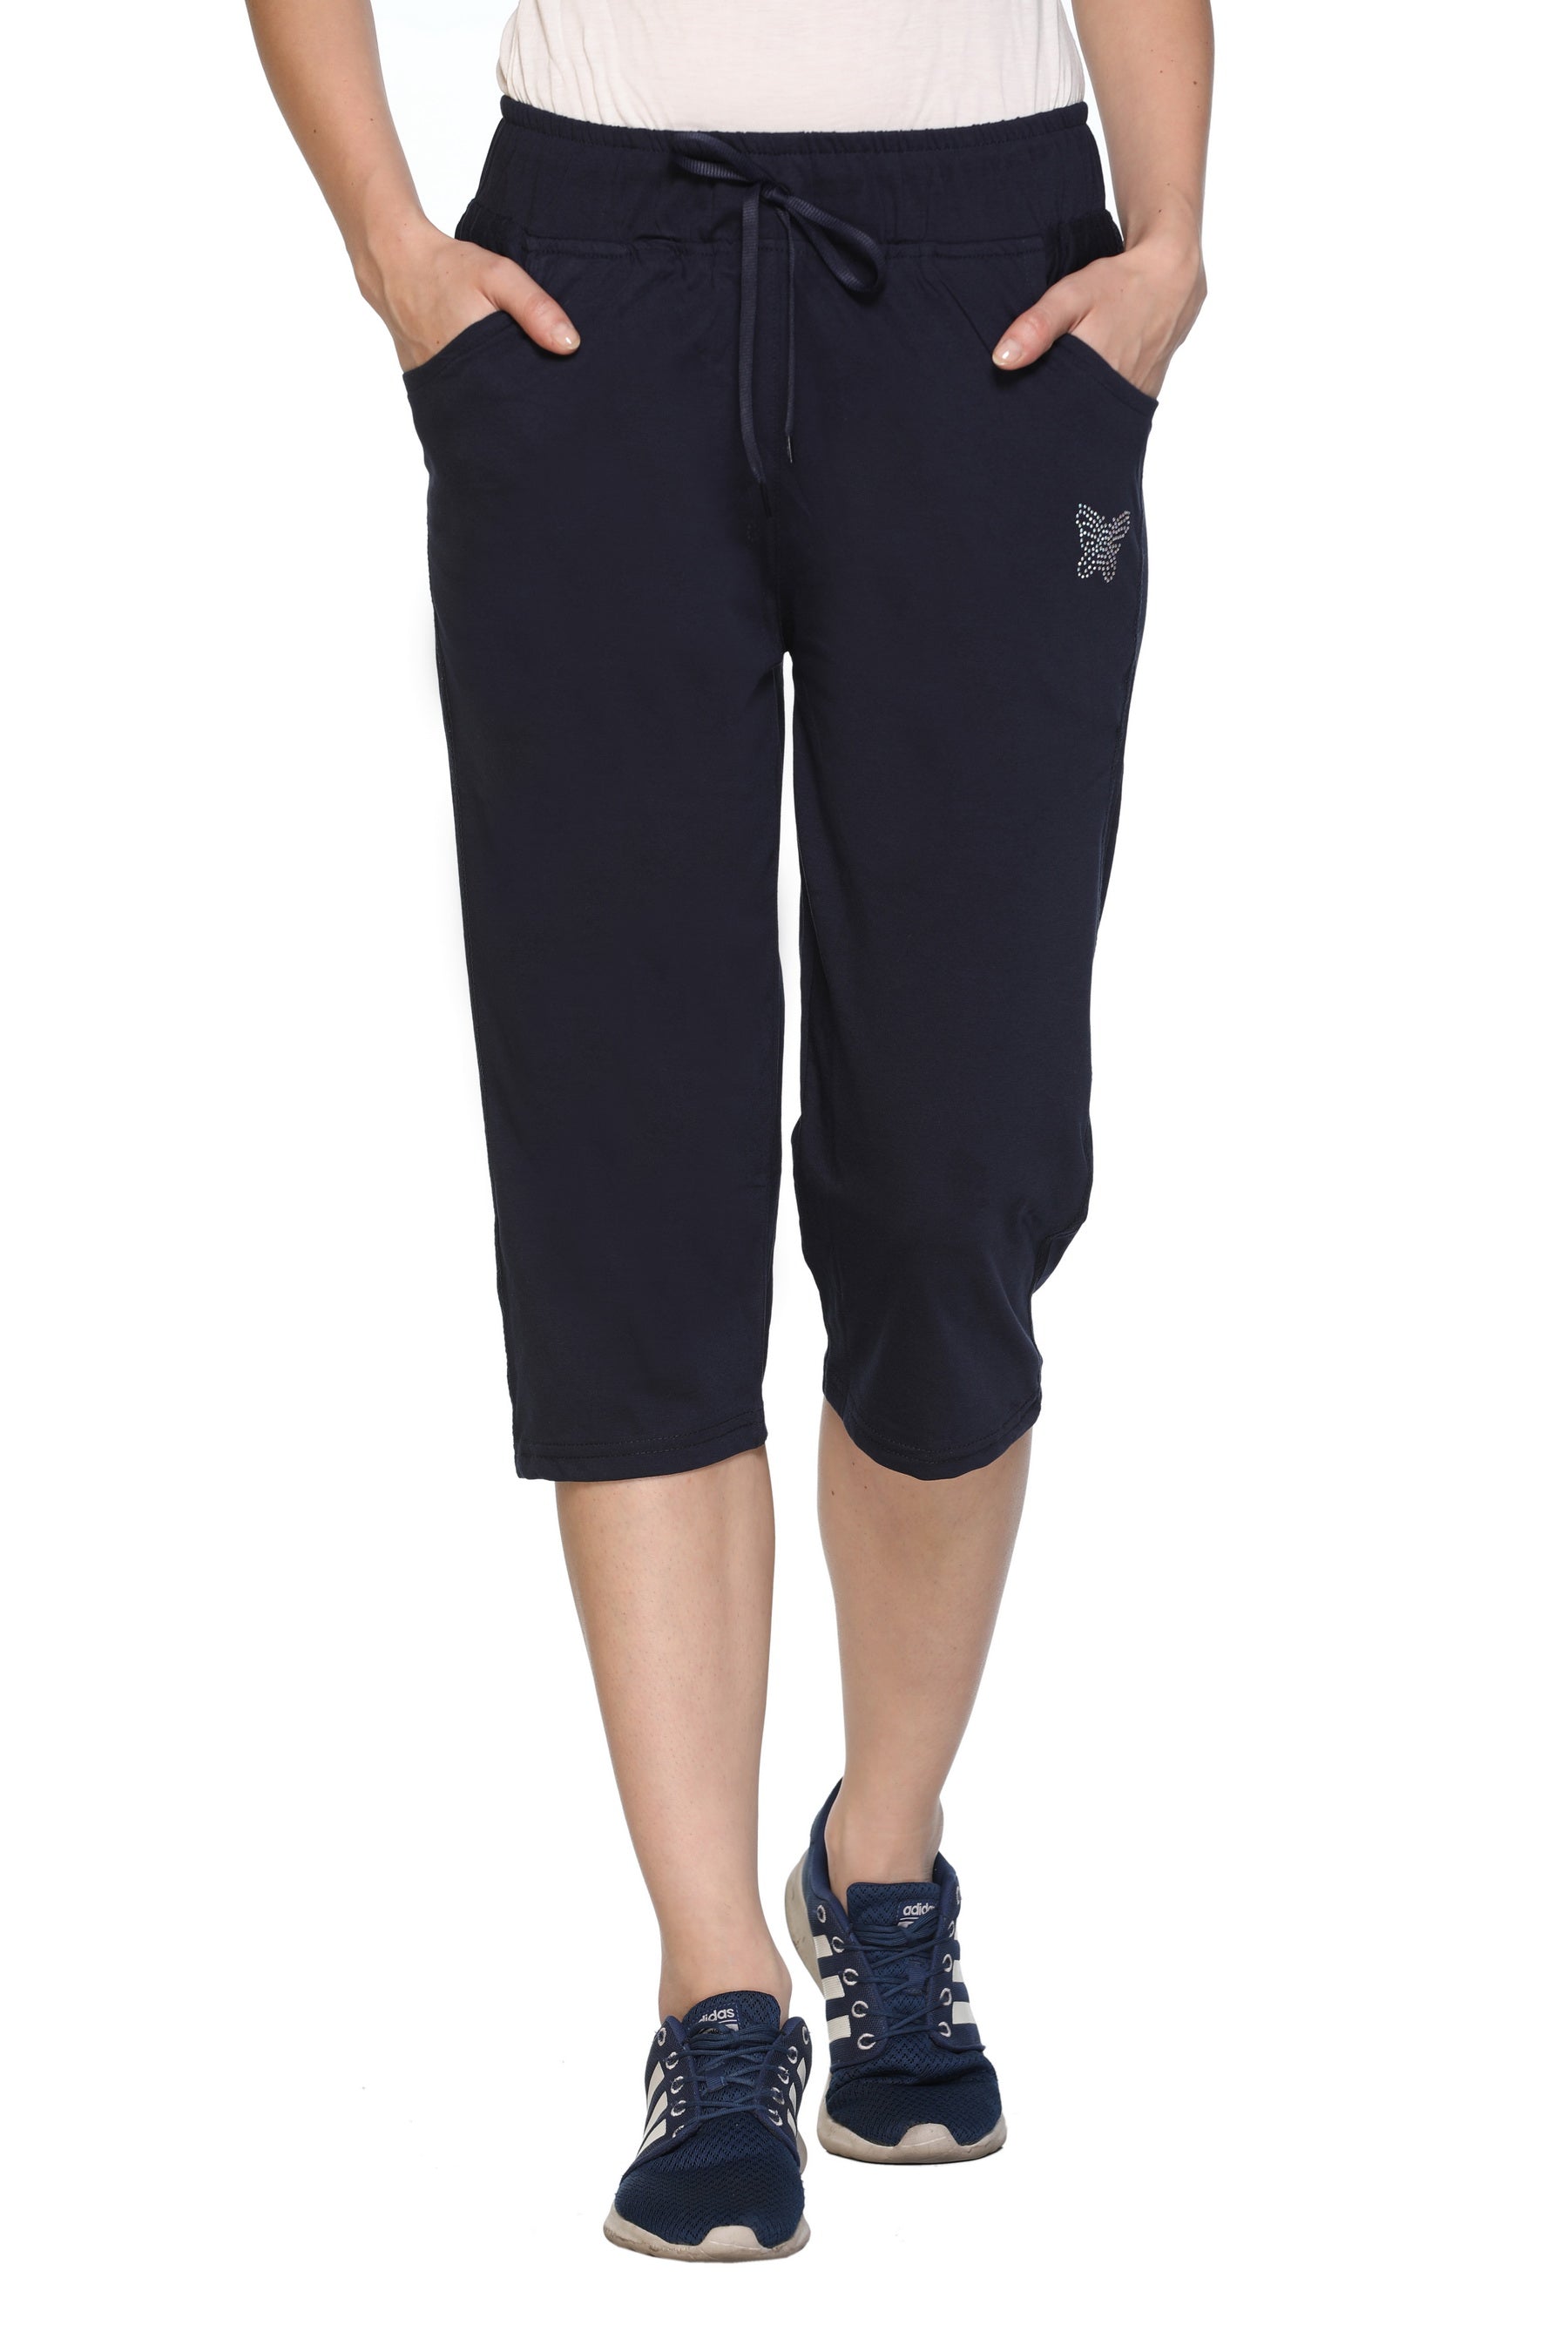 Women Shorts Pants Half Pants Capri Jogging Fitness Casual Solid Summer  Pocke | eBay